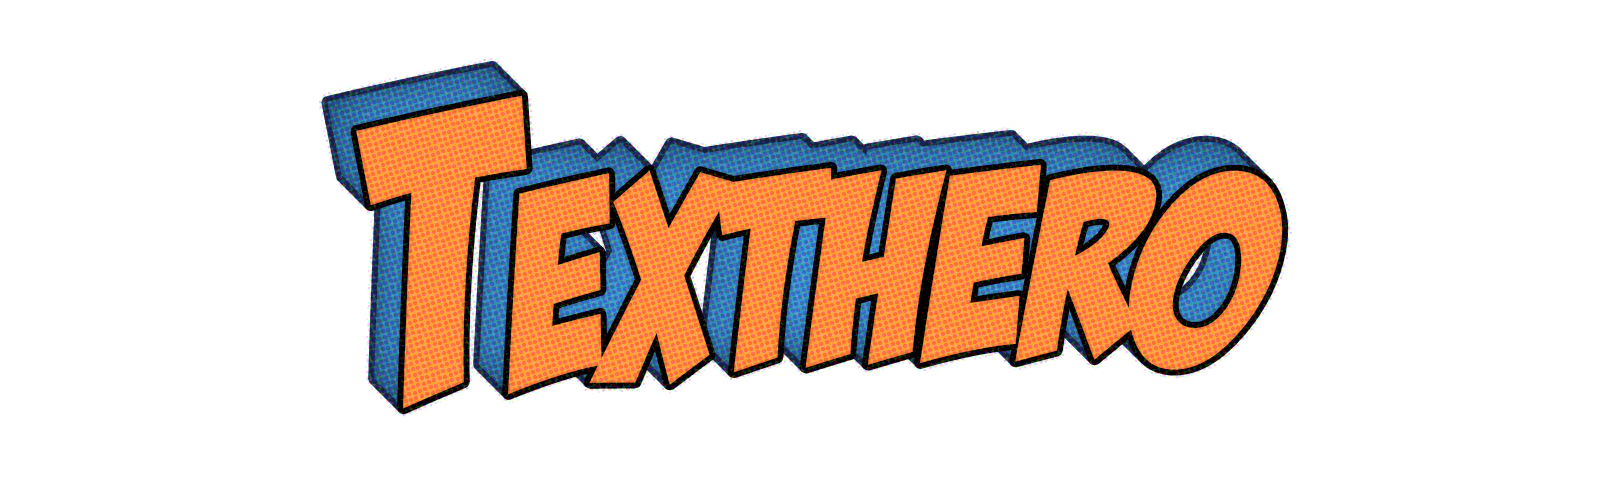 texthero-logo